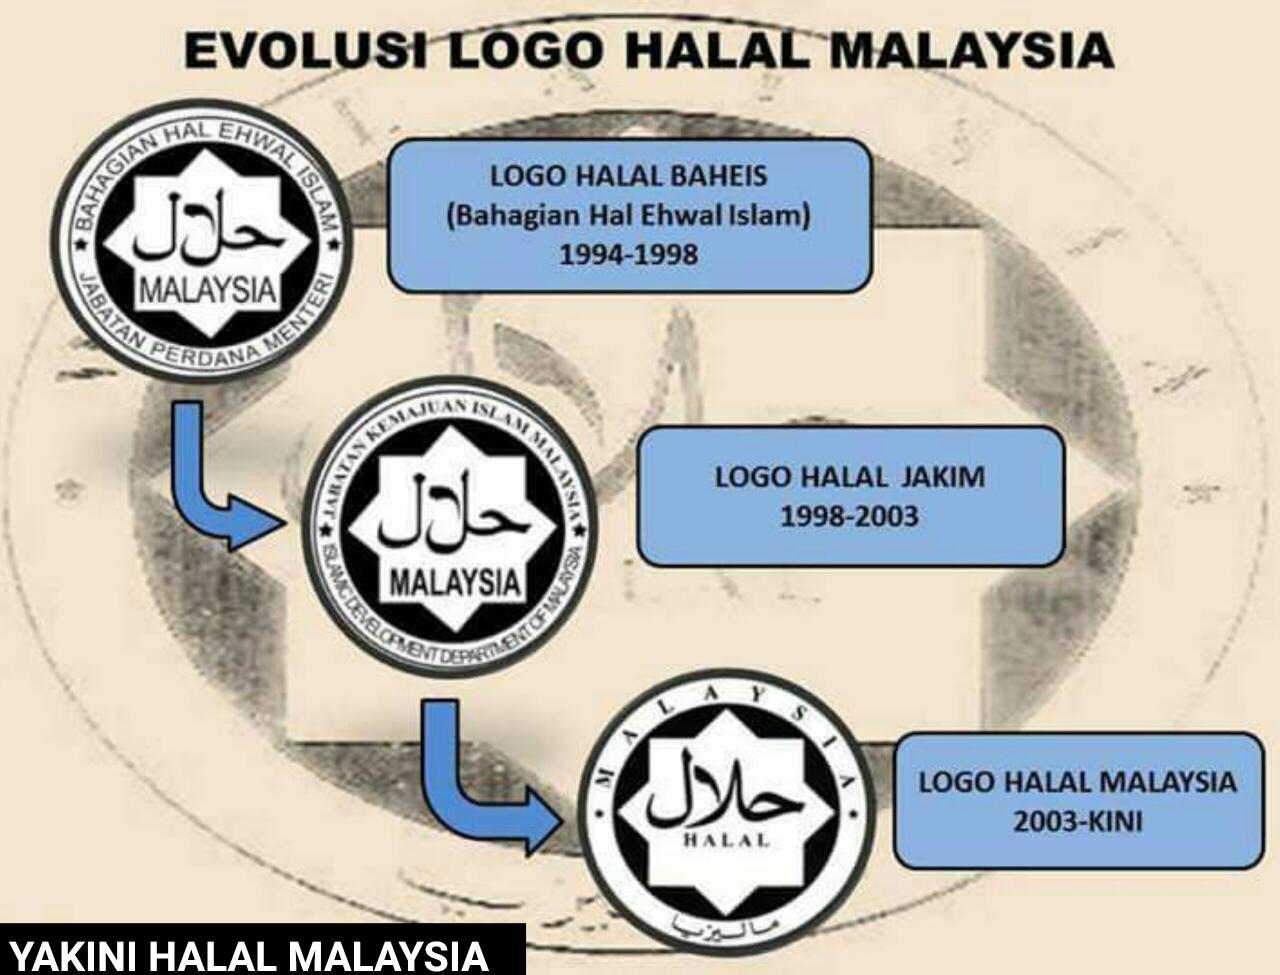 JAKIM on X: "@bernamaradio Logo Halal Malaysia. https://t.co/91EAKuR2nT" / X